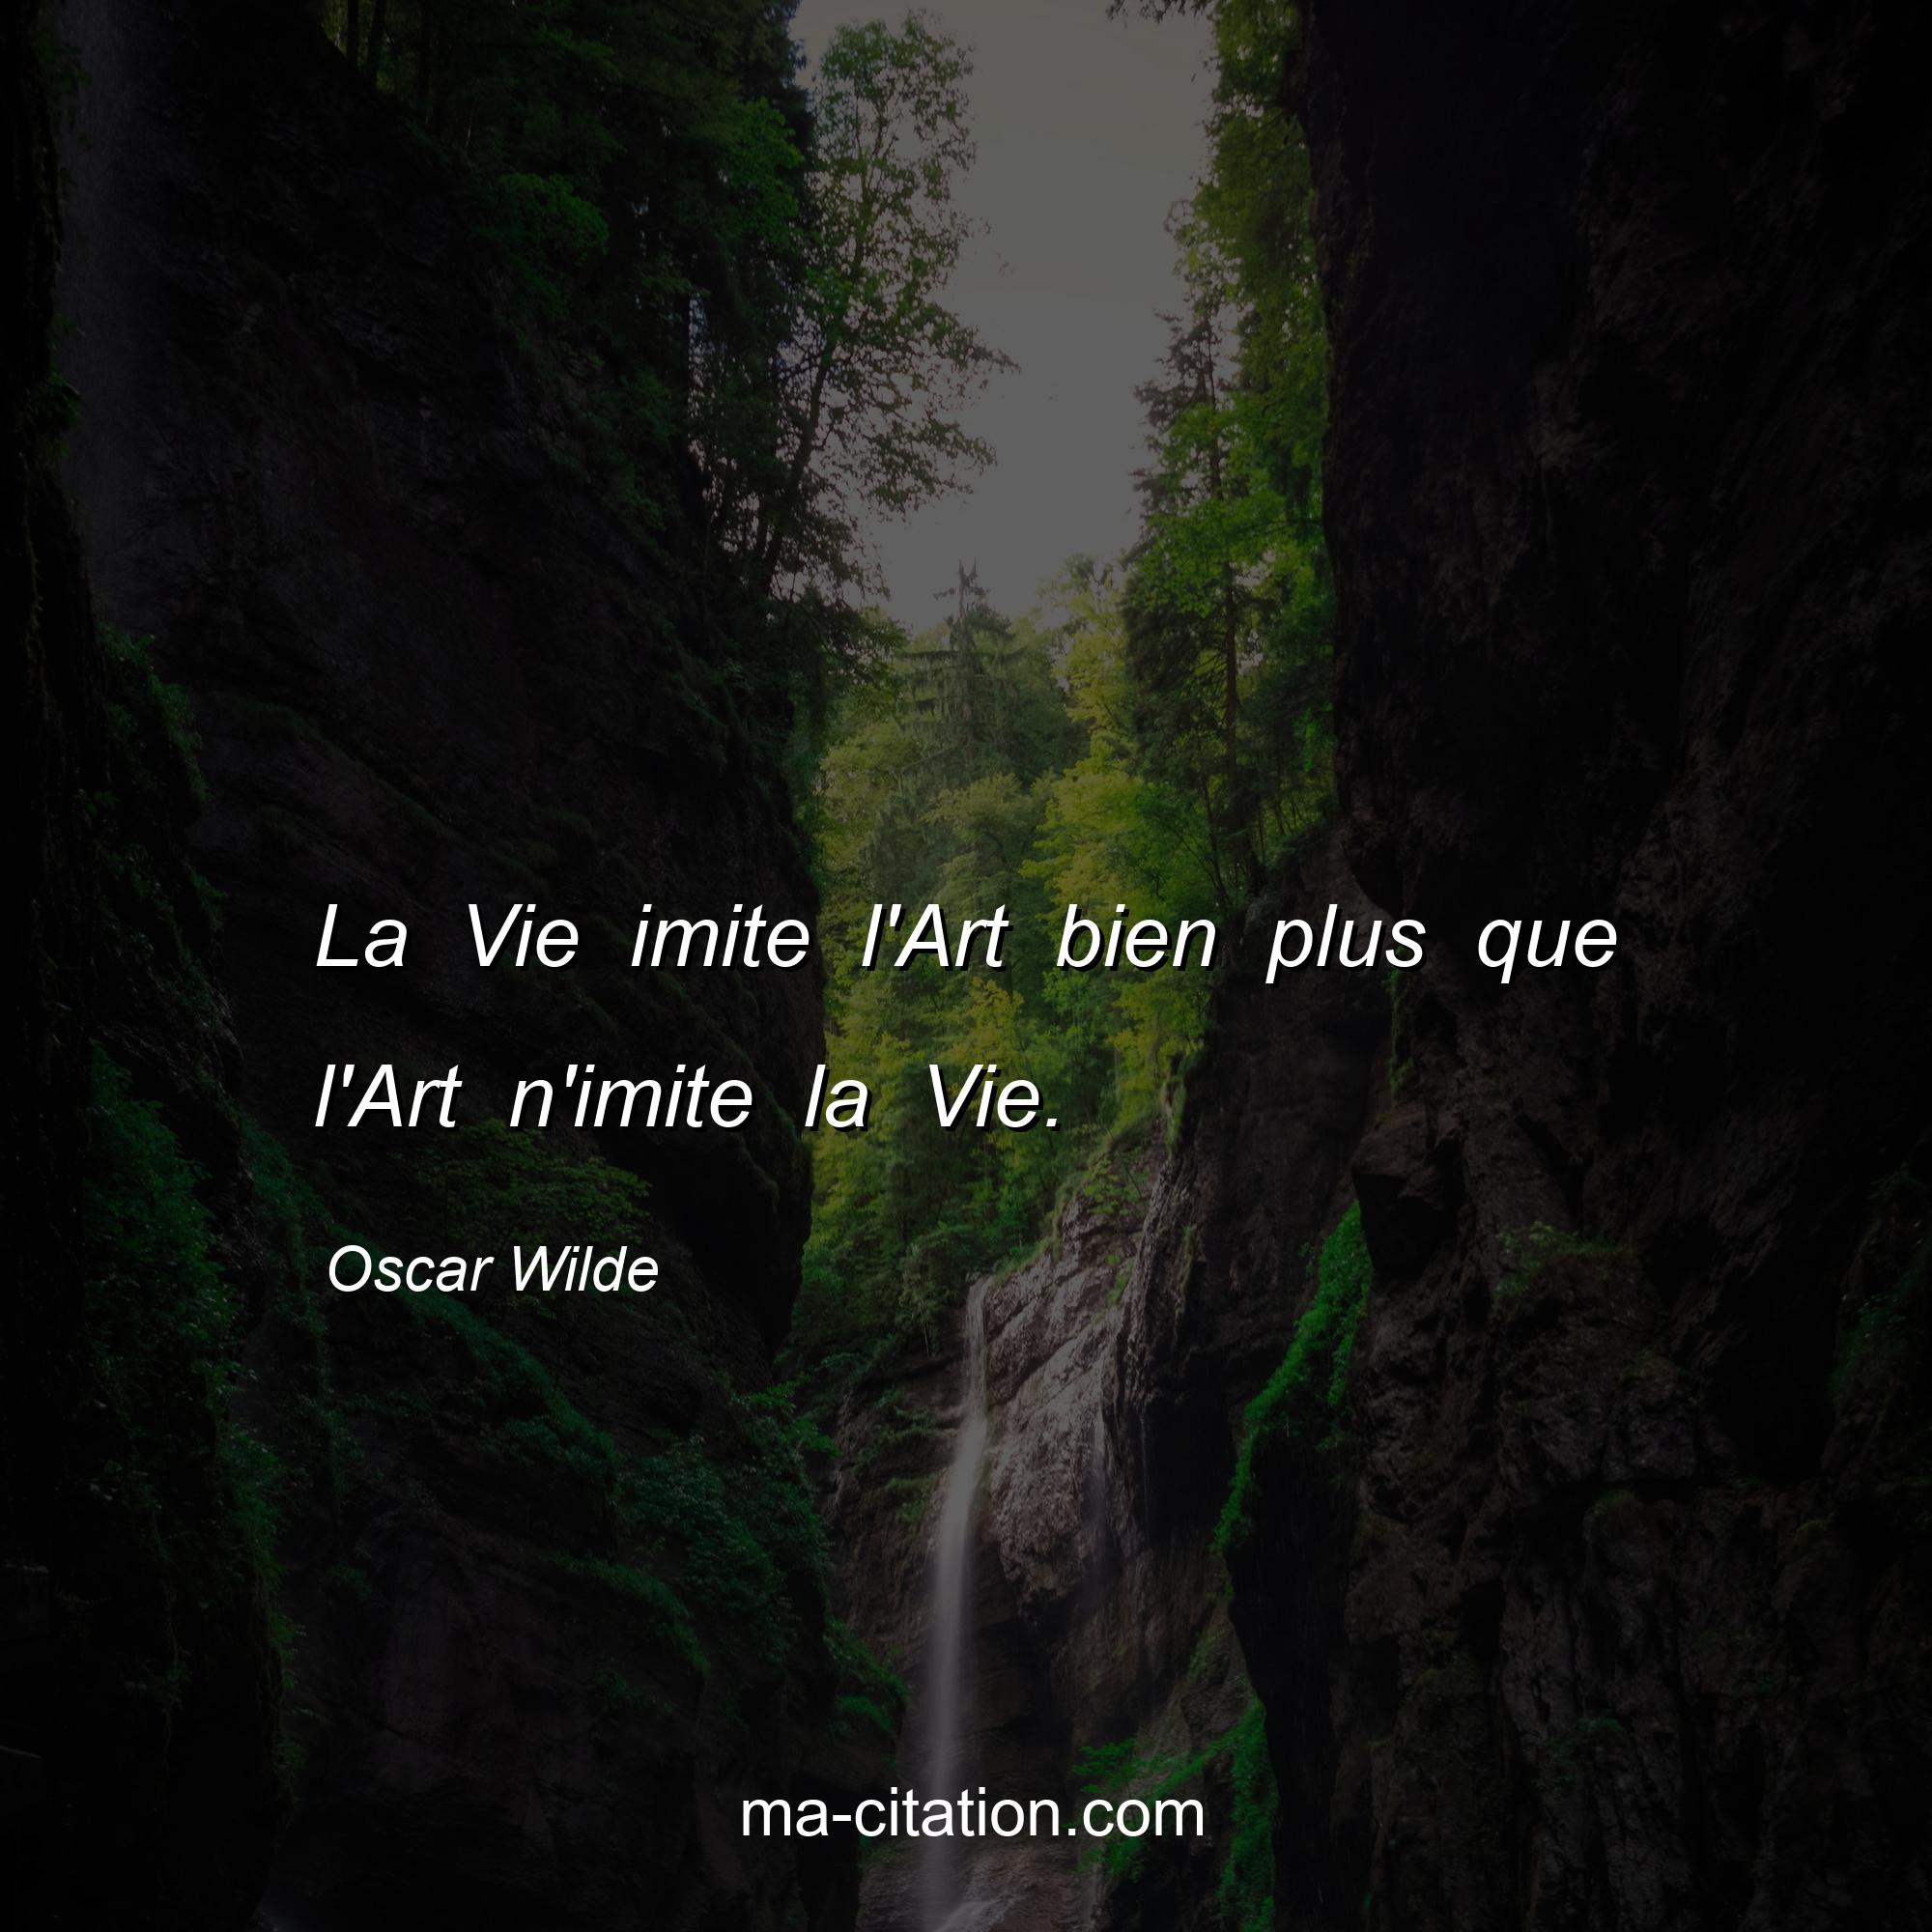 Oscar Wilde : La Vie imite l'Art bien plus que l'Art n'imite la Vie.